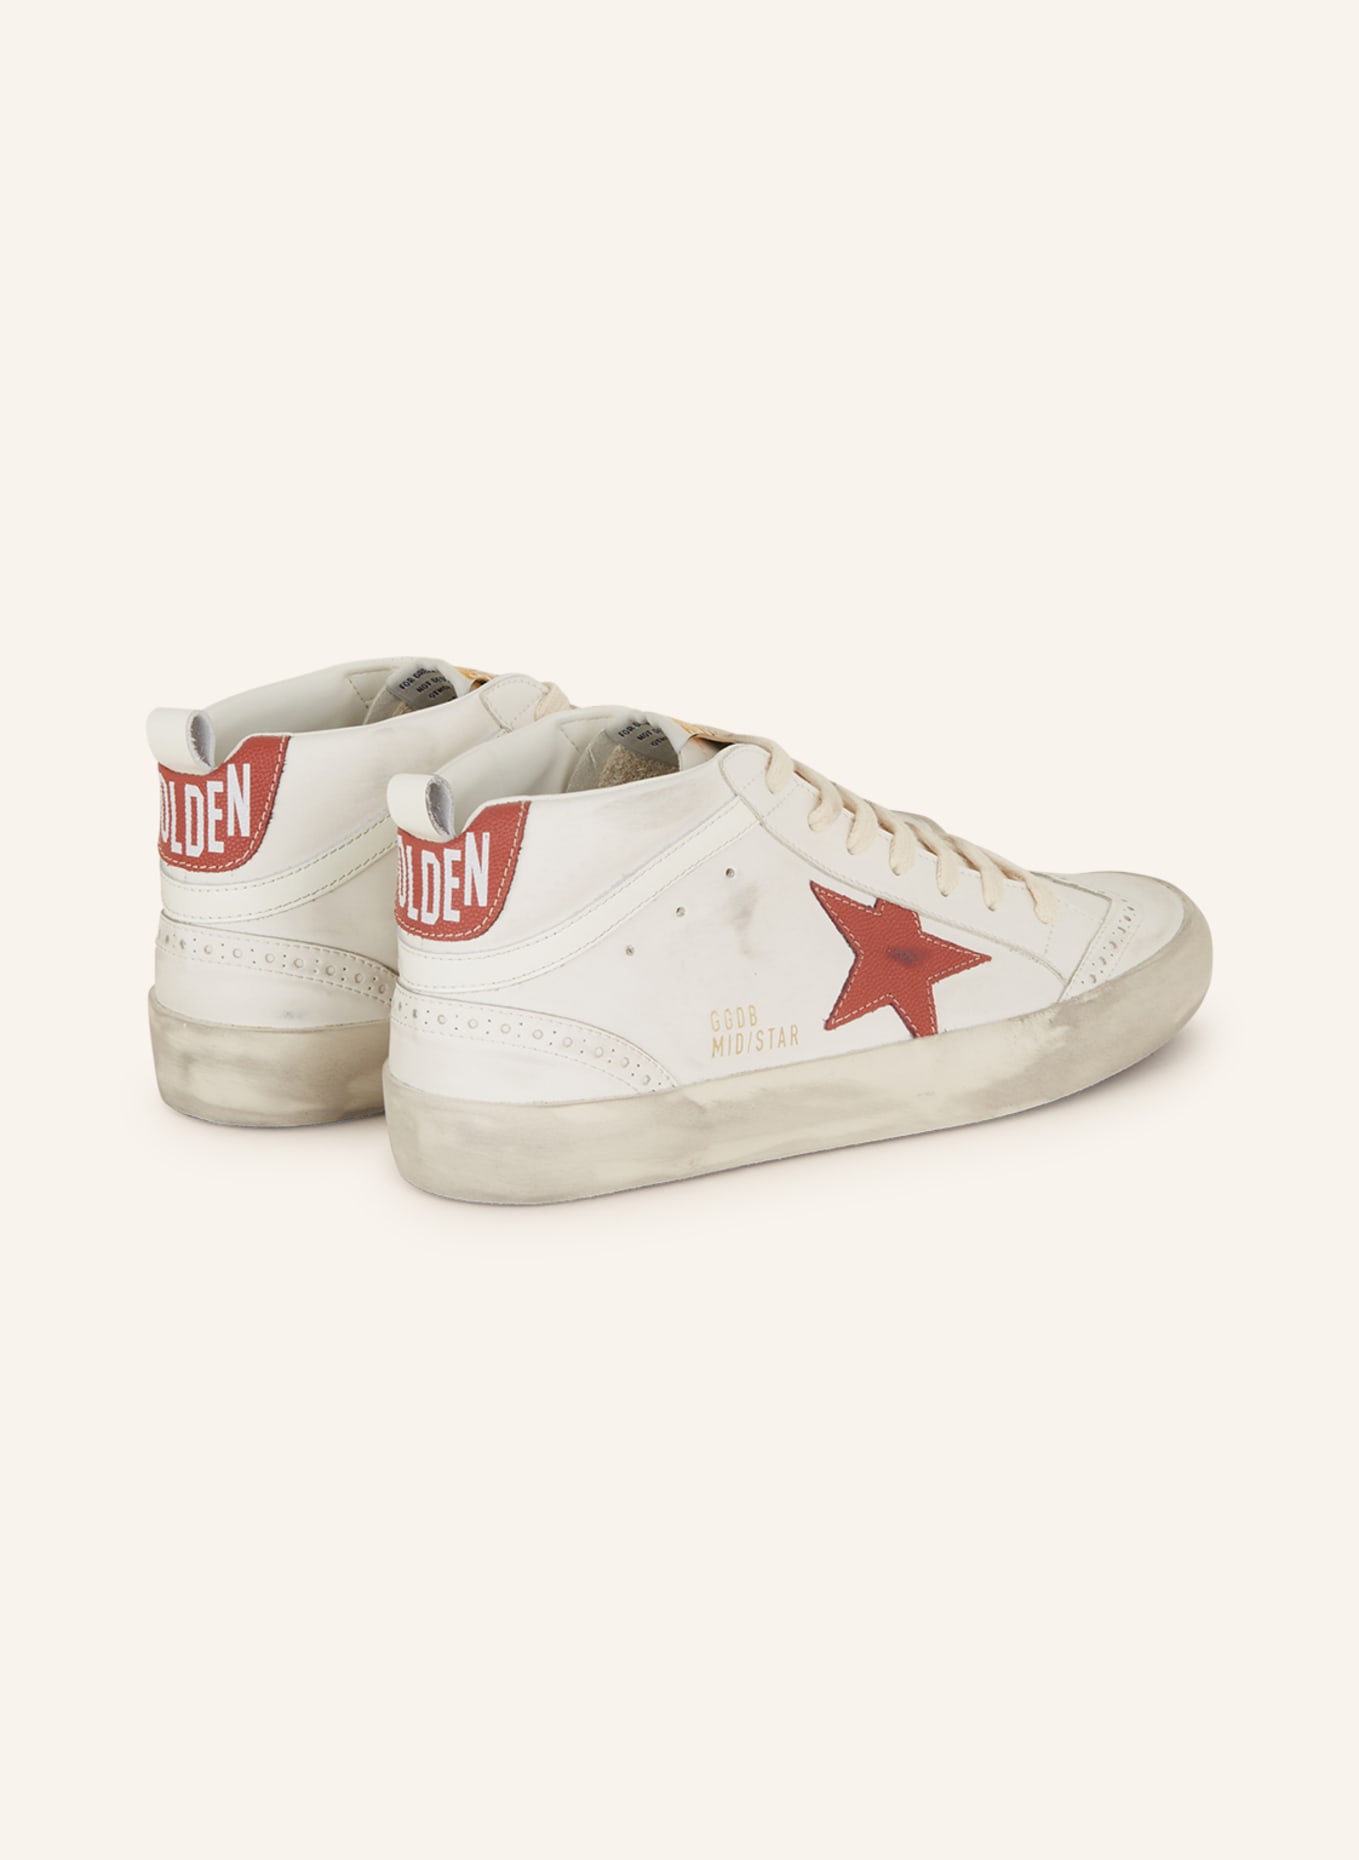 GOLDEN GOOSE Hightop-Sneaker MID STAR, Farbe: WEISS/ ROT (Bild 2)